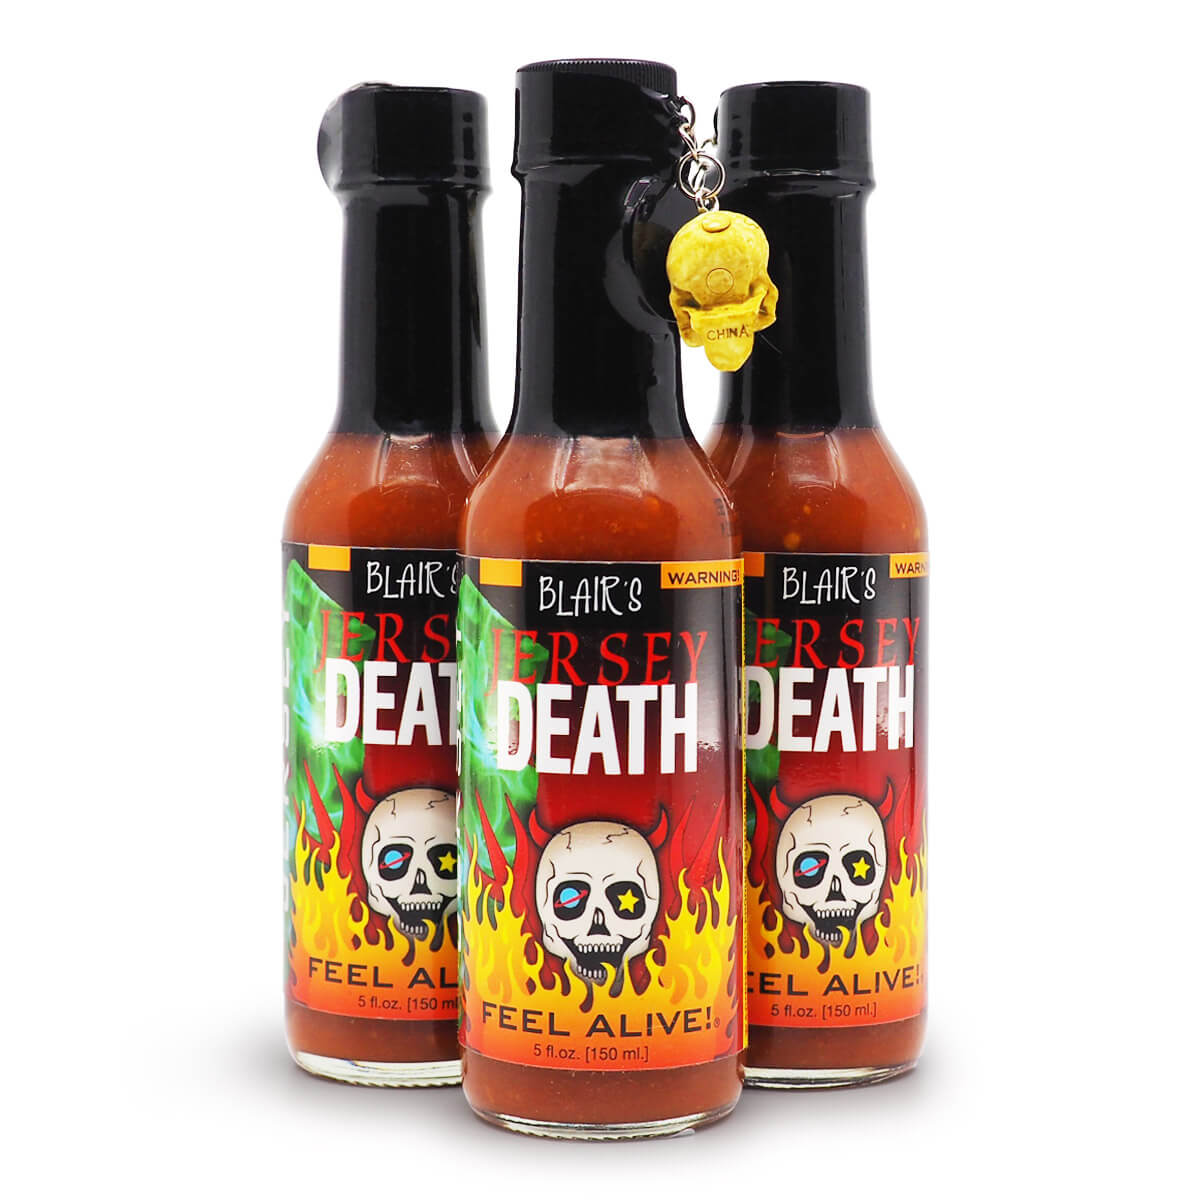 DSCN1633, Blair's Jersey Hot Sauce of Death!, Sculldog